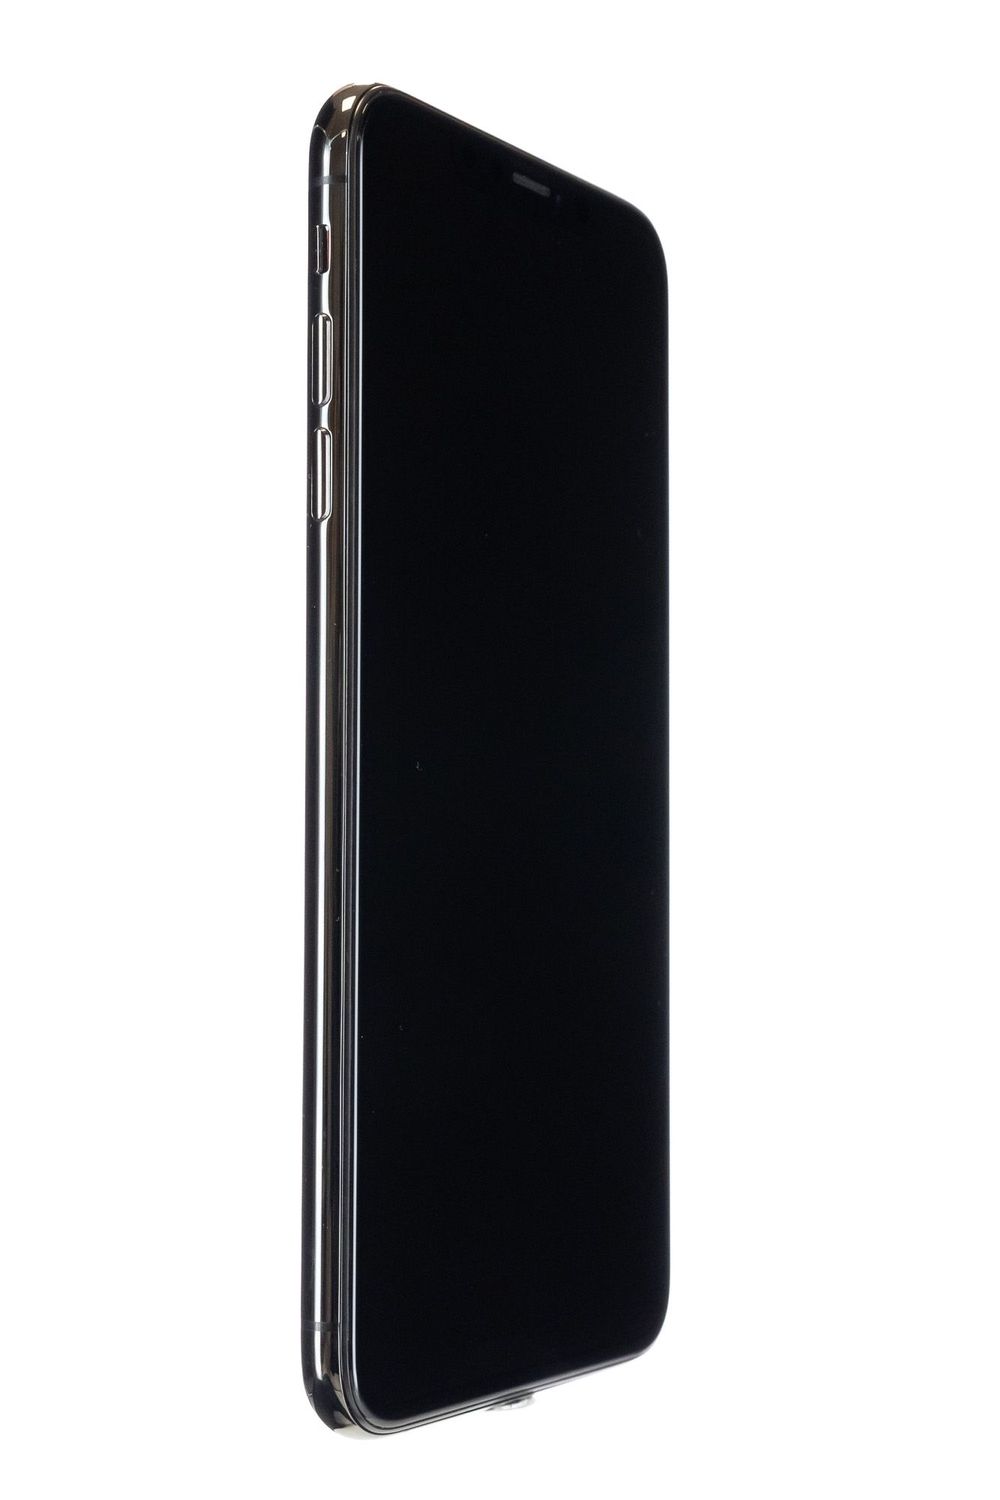 Mobiltelefon Apple iPhone XS Max, Space Grey, 512 GB, Foarte Bun